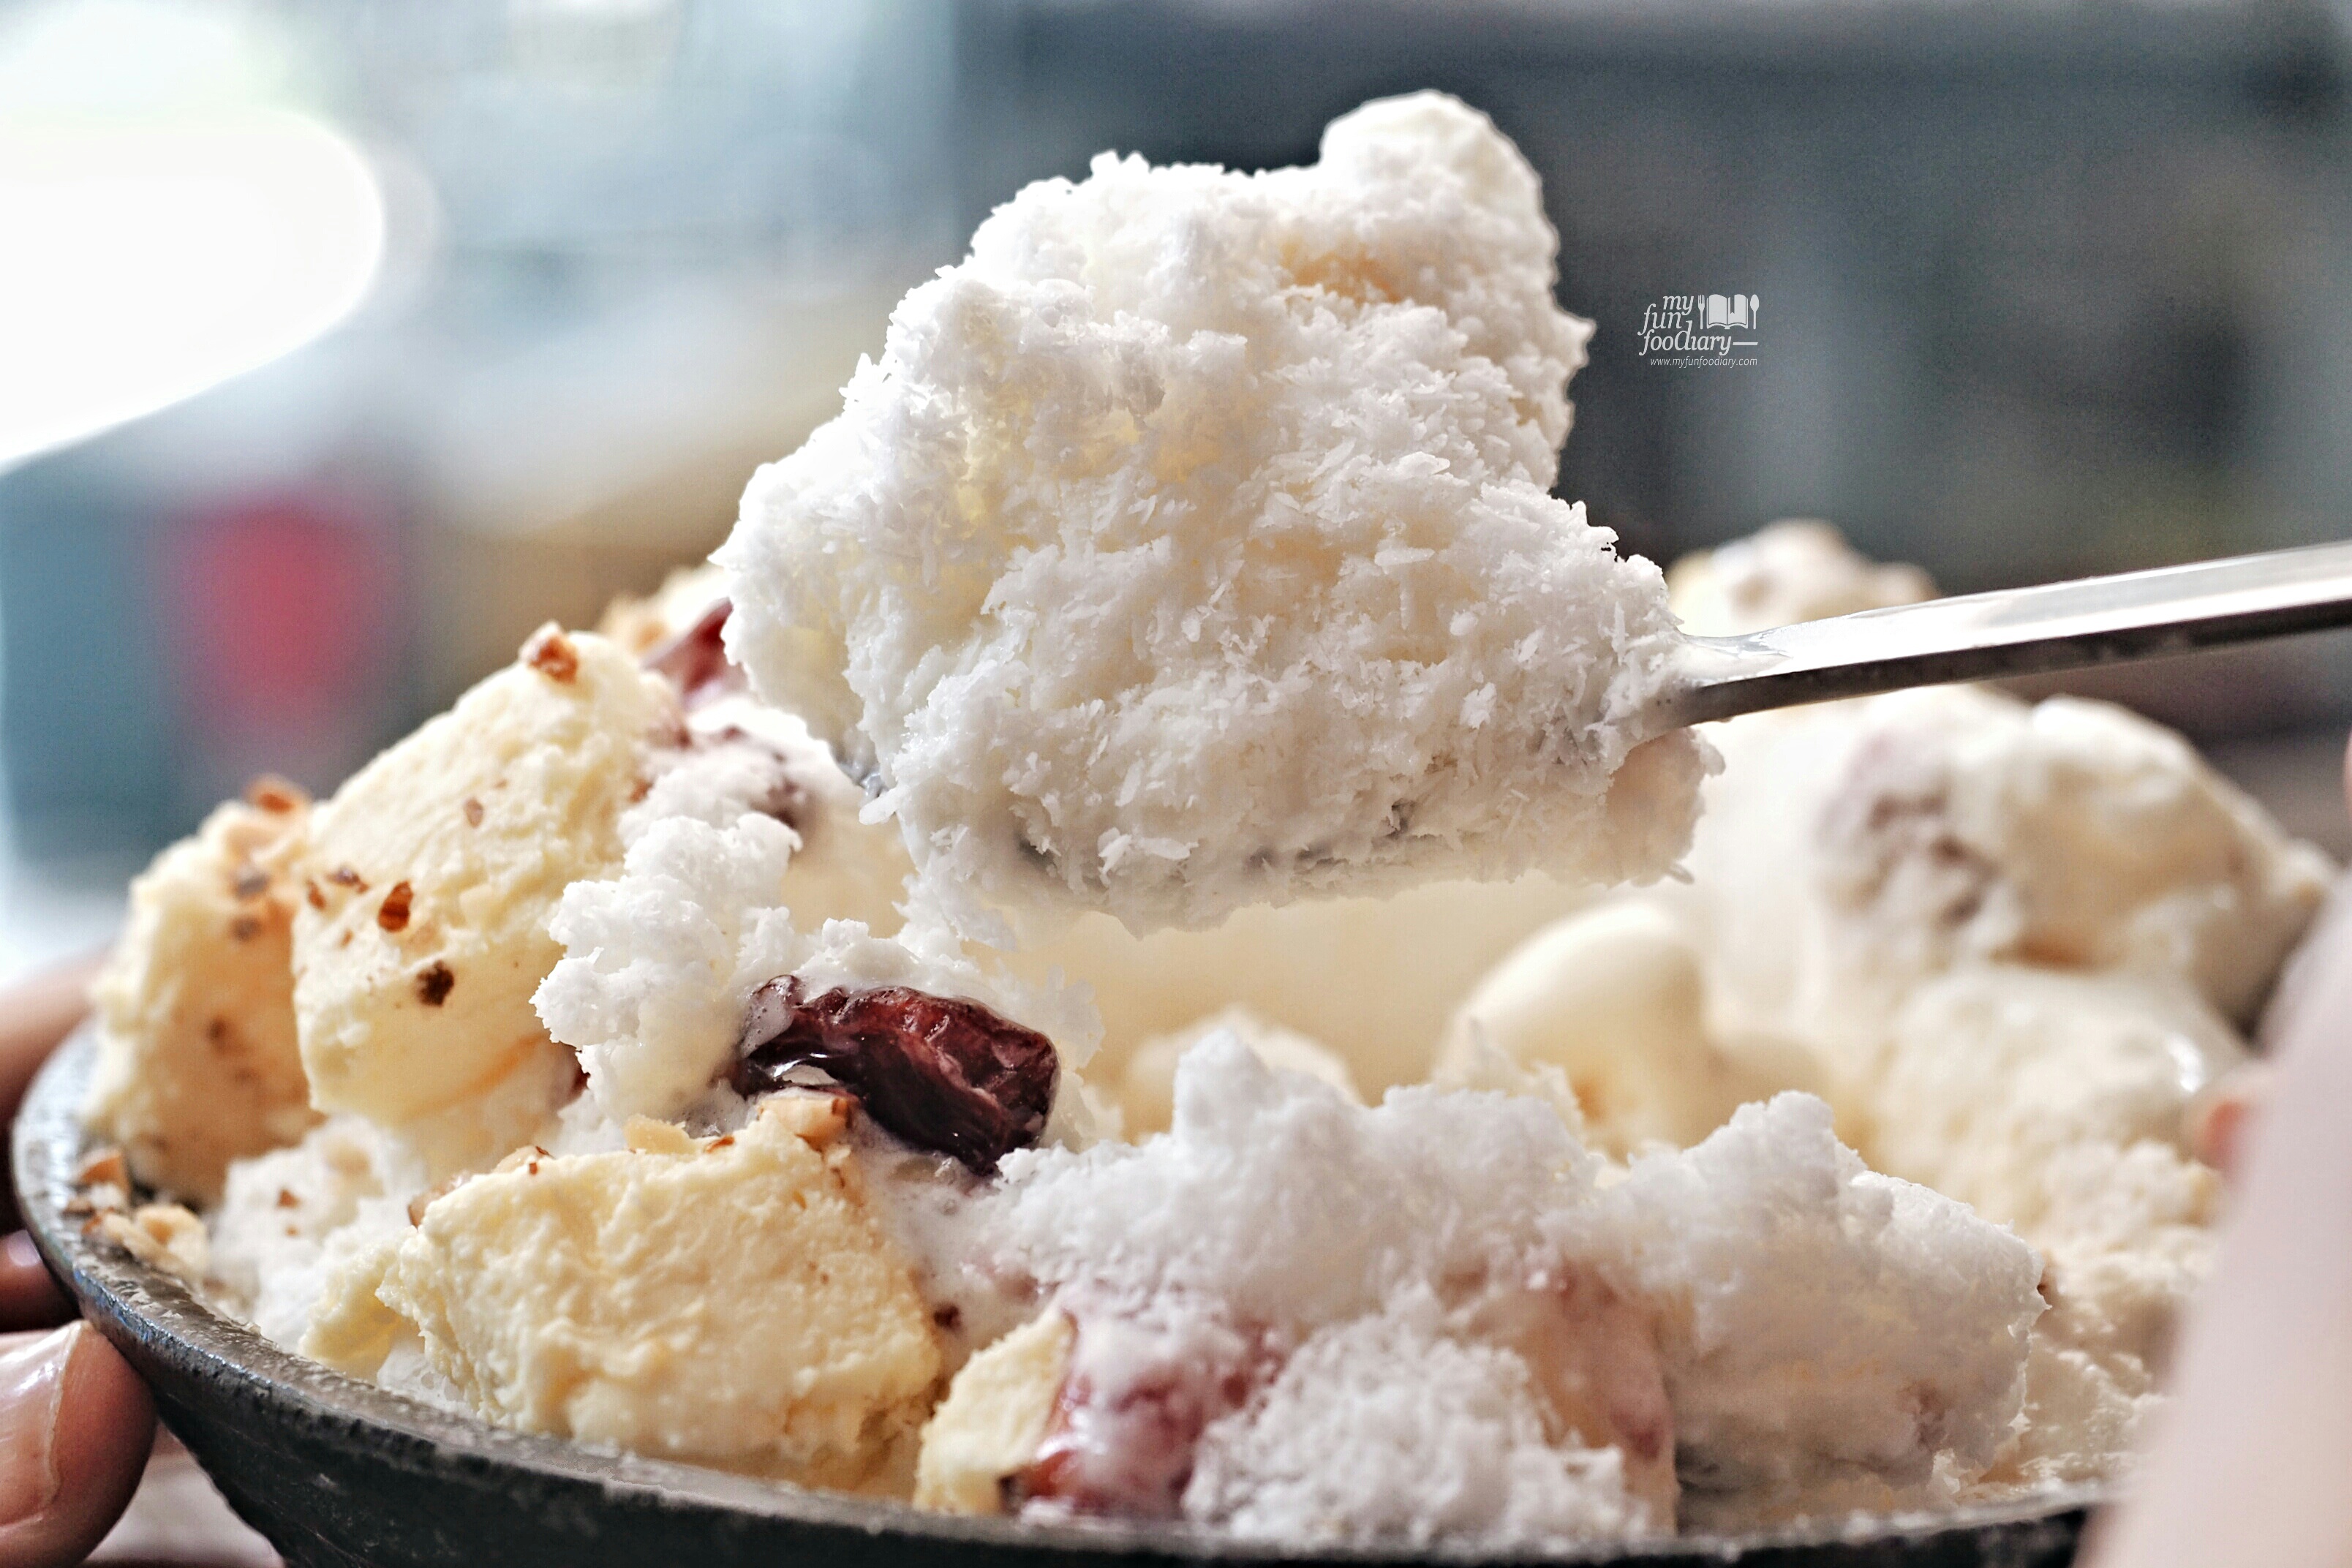 Snow Ice Bing Go Korean Dessert Cafe by Myfunfoodiary